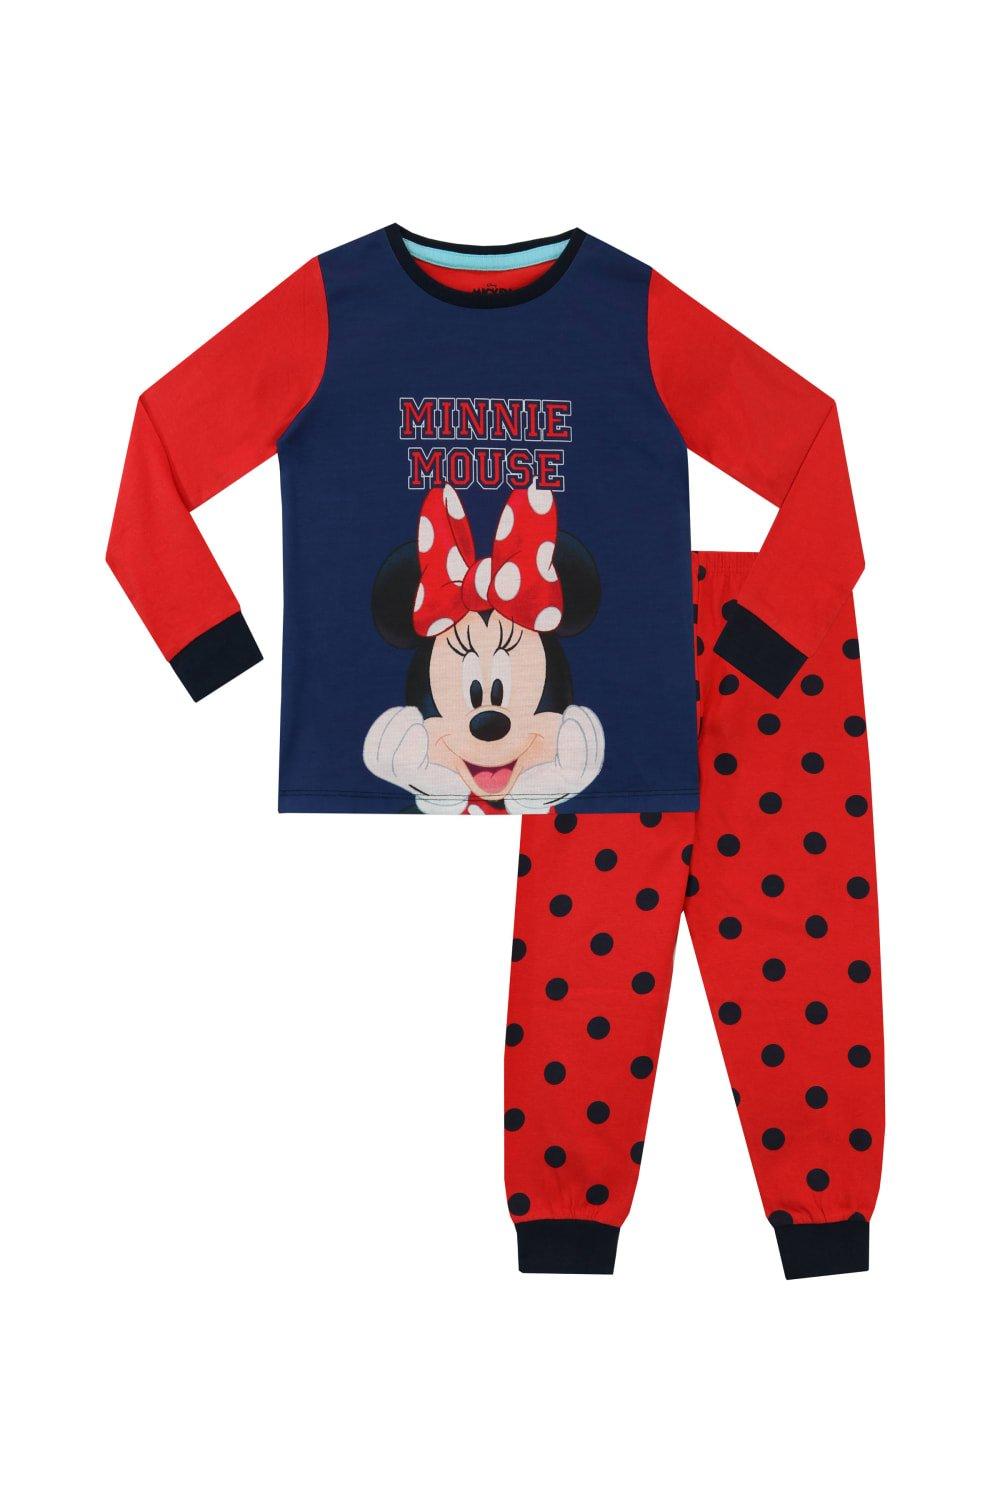 Minnie Mouse Polka Dot Pyjamas